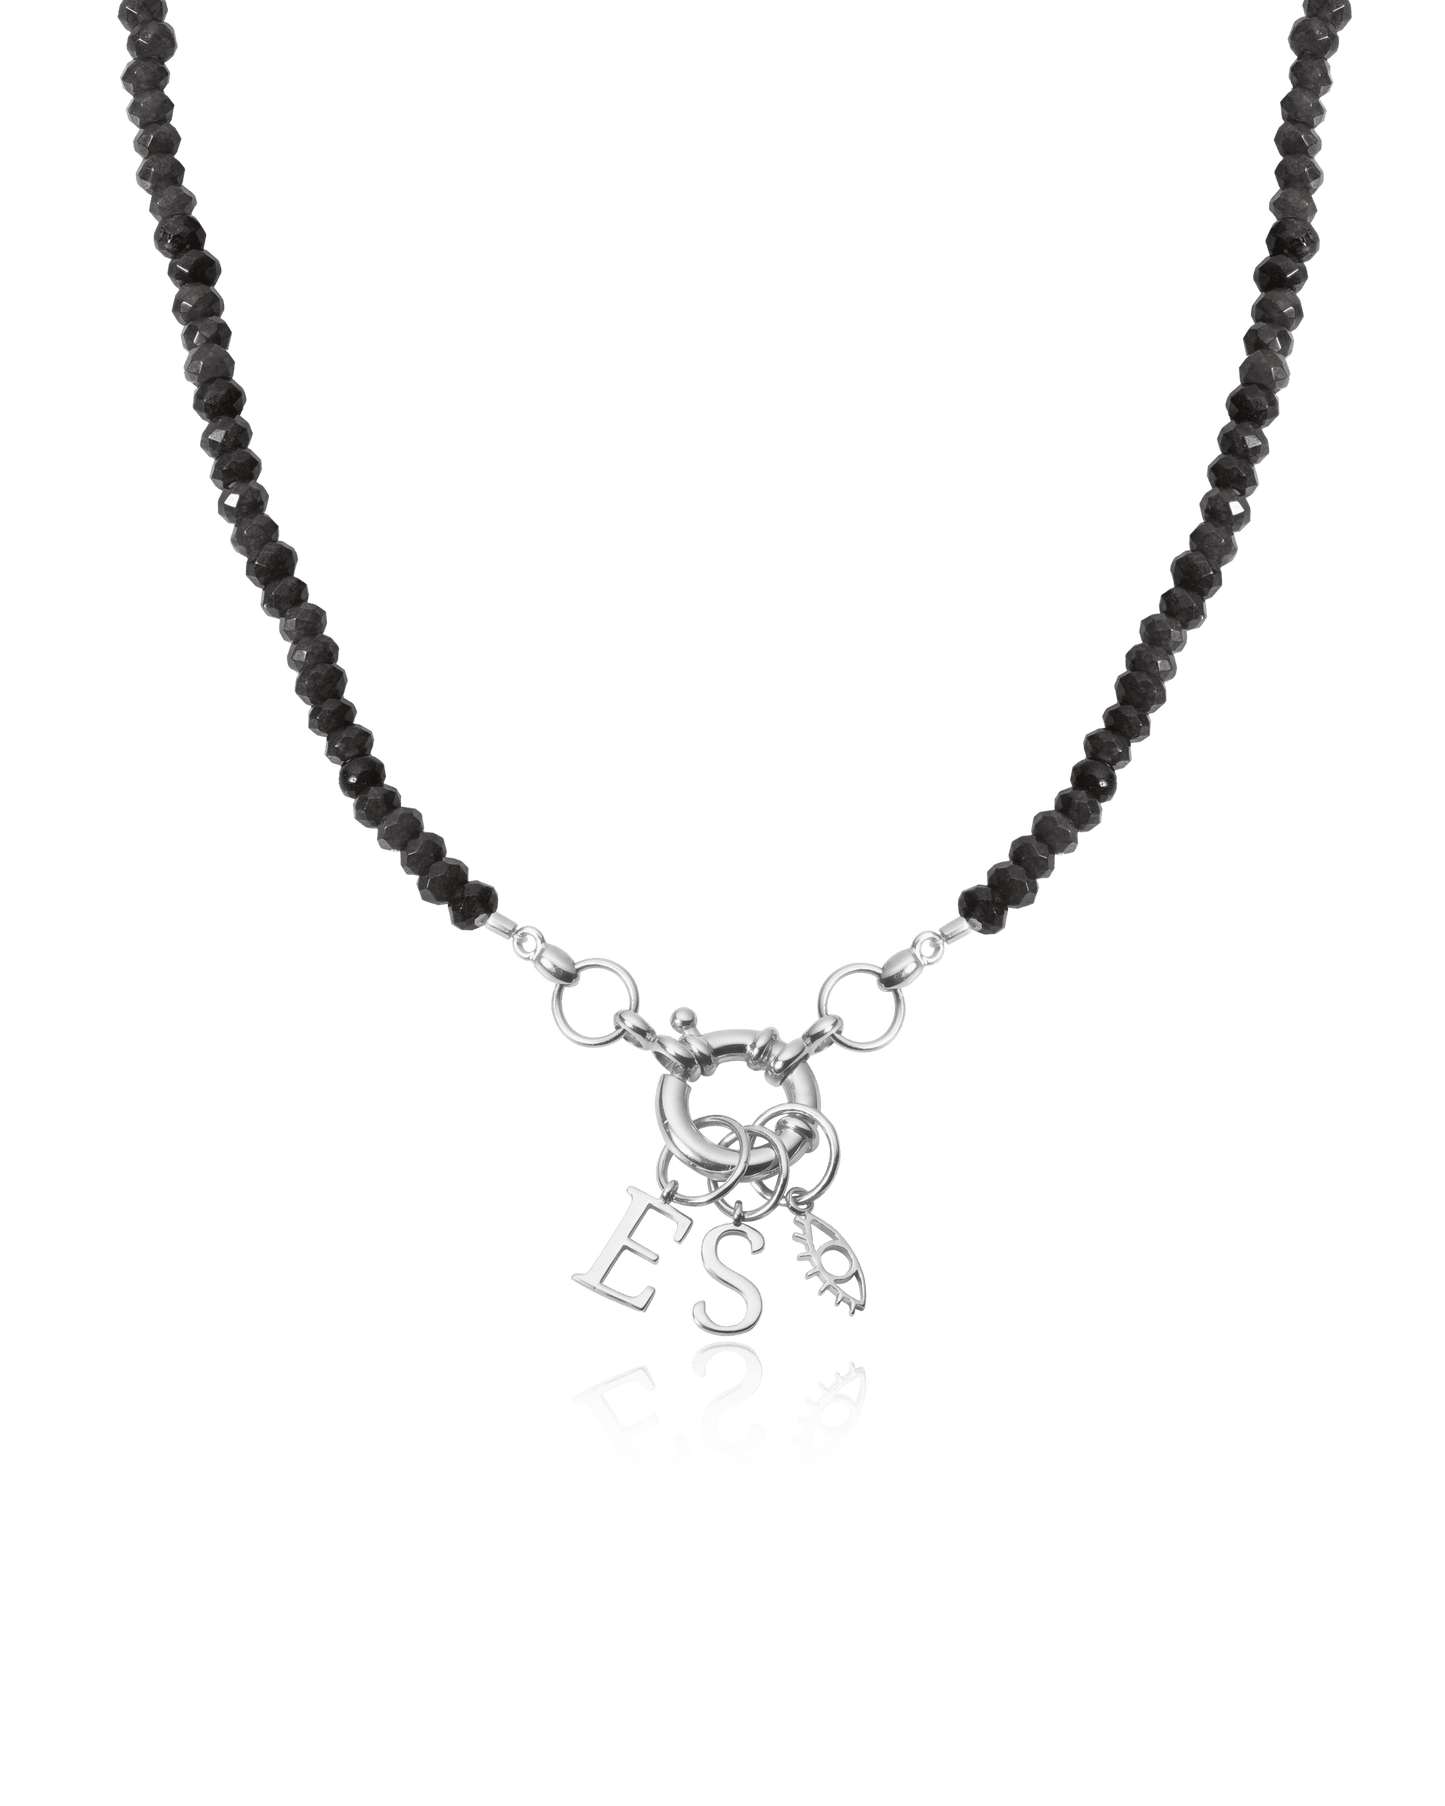 Collier Pendentif Cadenas - Argent 925 Necklaces magal-dev Perles de verre Spinelle Noir 1 Pendentif 40cm